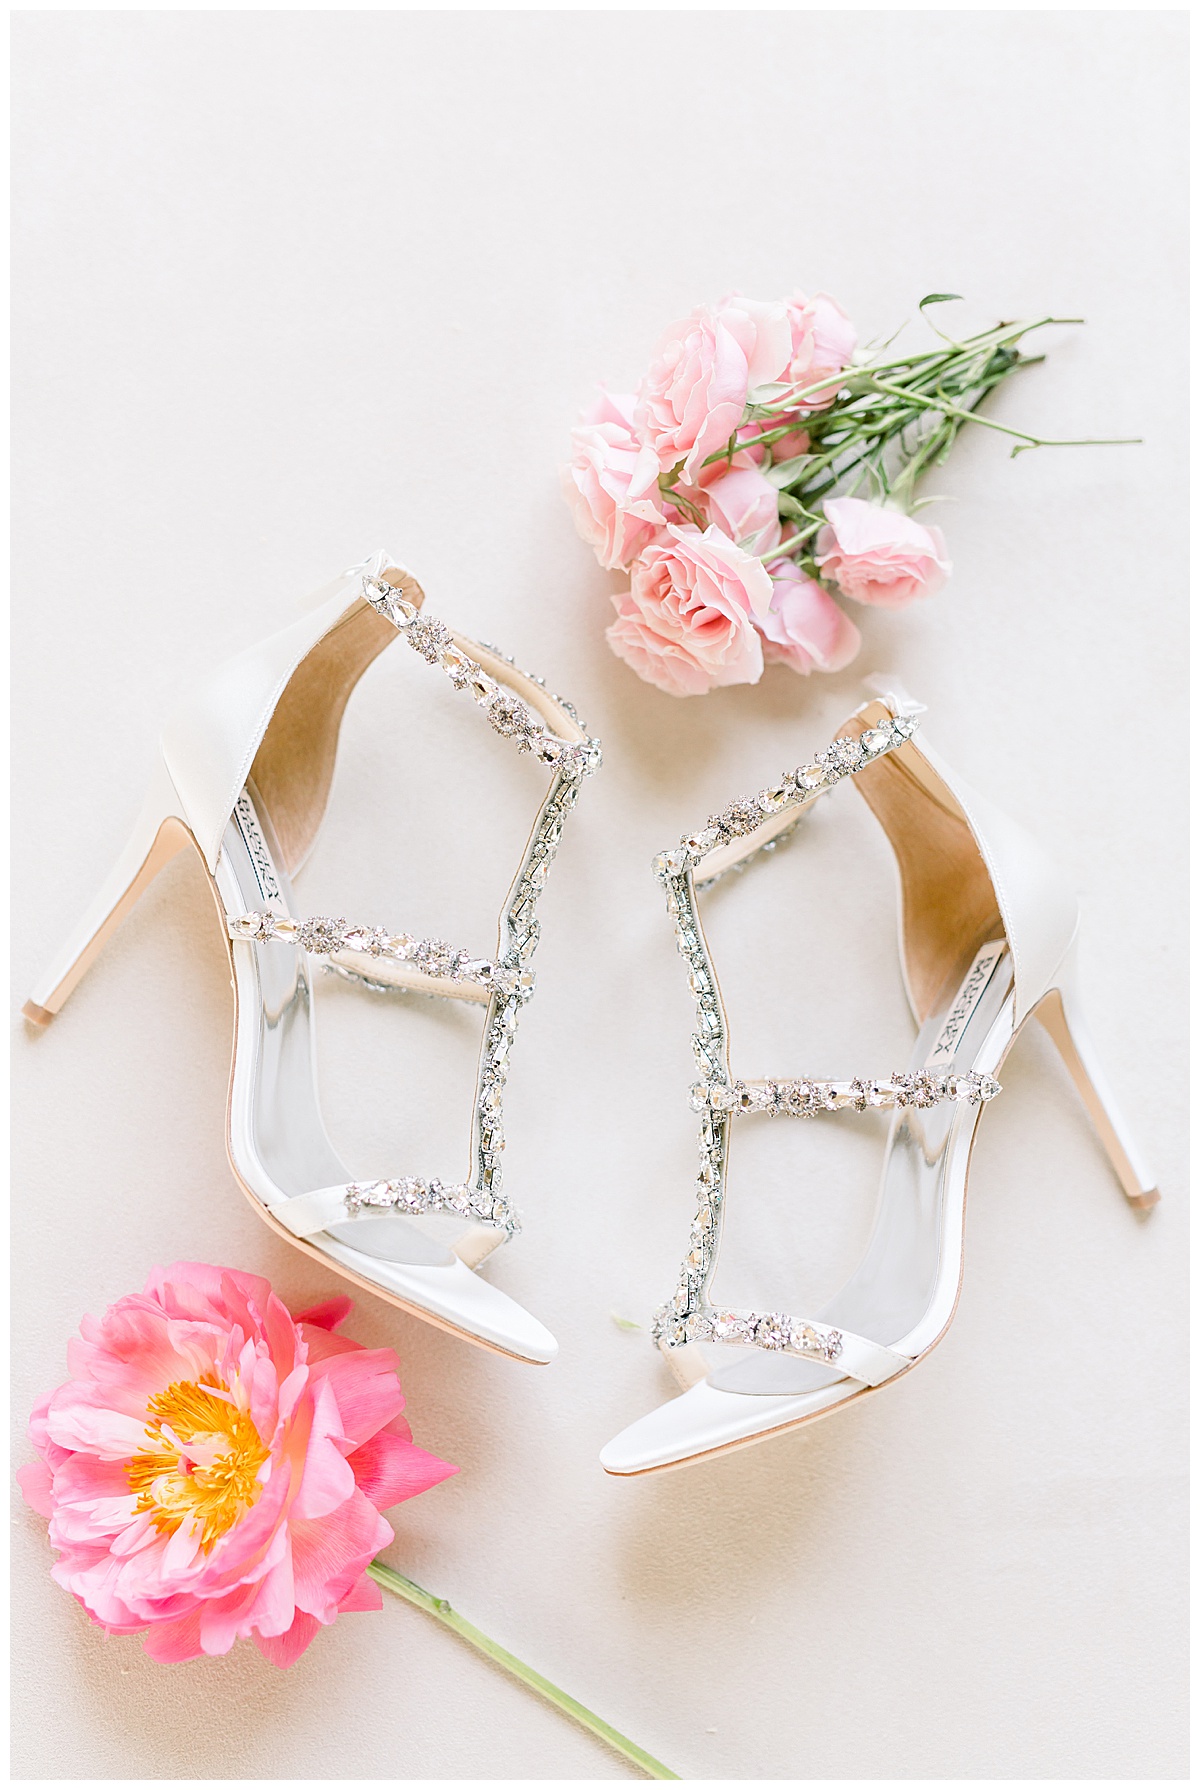 Badgley Mischka heels and florals at Hyatt Regency Hill Country Resort Wedding in San Antonio, TX | San Antonio Wedding photographer| Destination Wedding Photographer| Monica Roberts Photography | monicaroberts.com